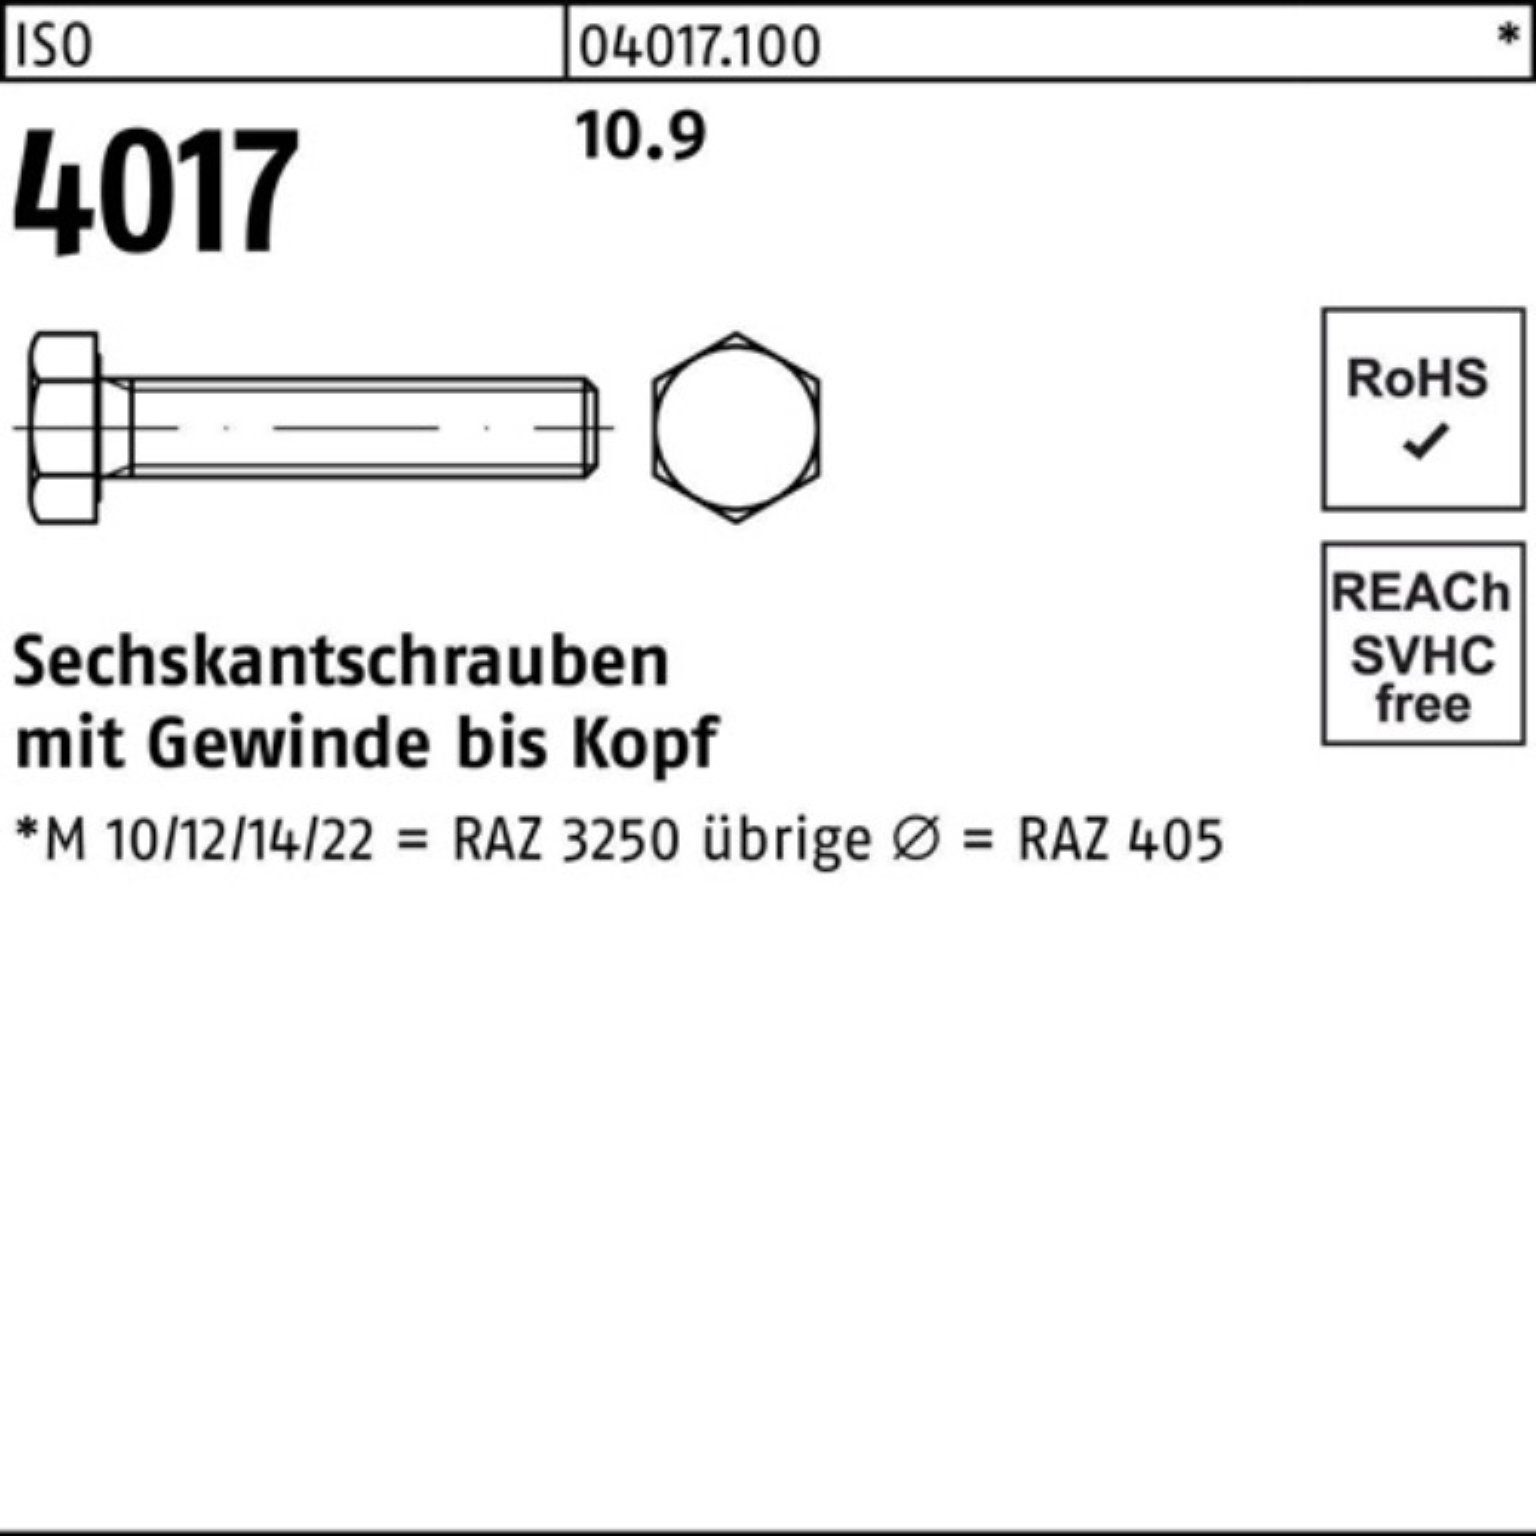 Pack 240 ISO Sechskantschraube Bufab M20x 40 VG 1 Stück 4017 10.9 100er ISO Sechskantschraube